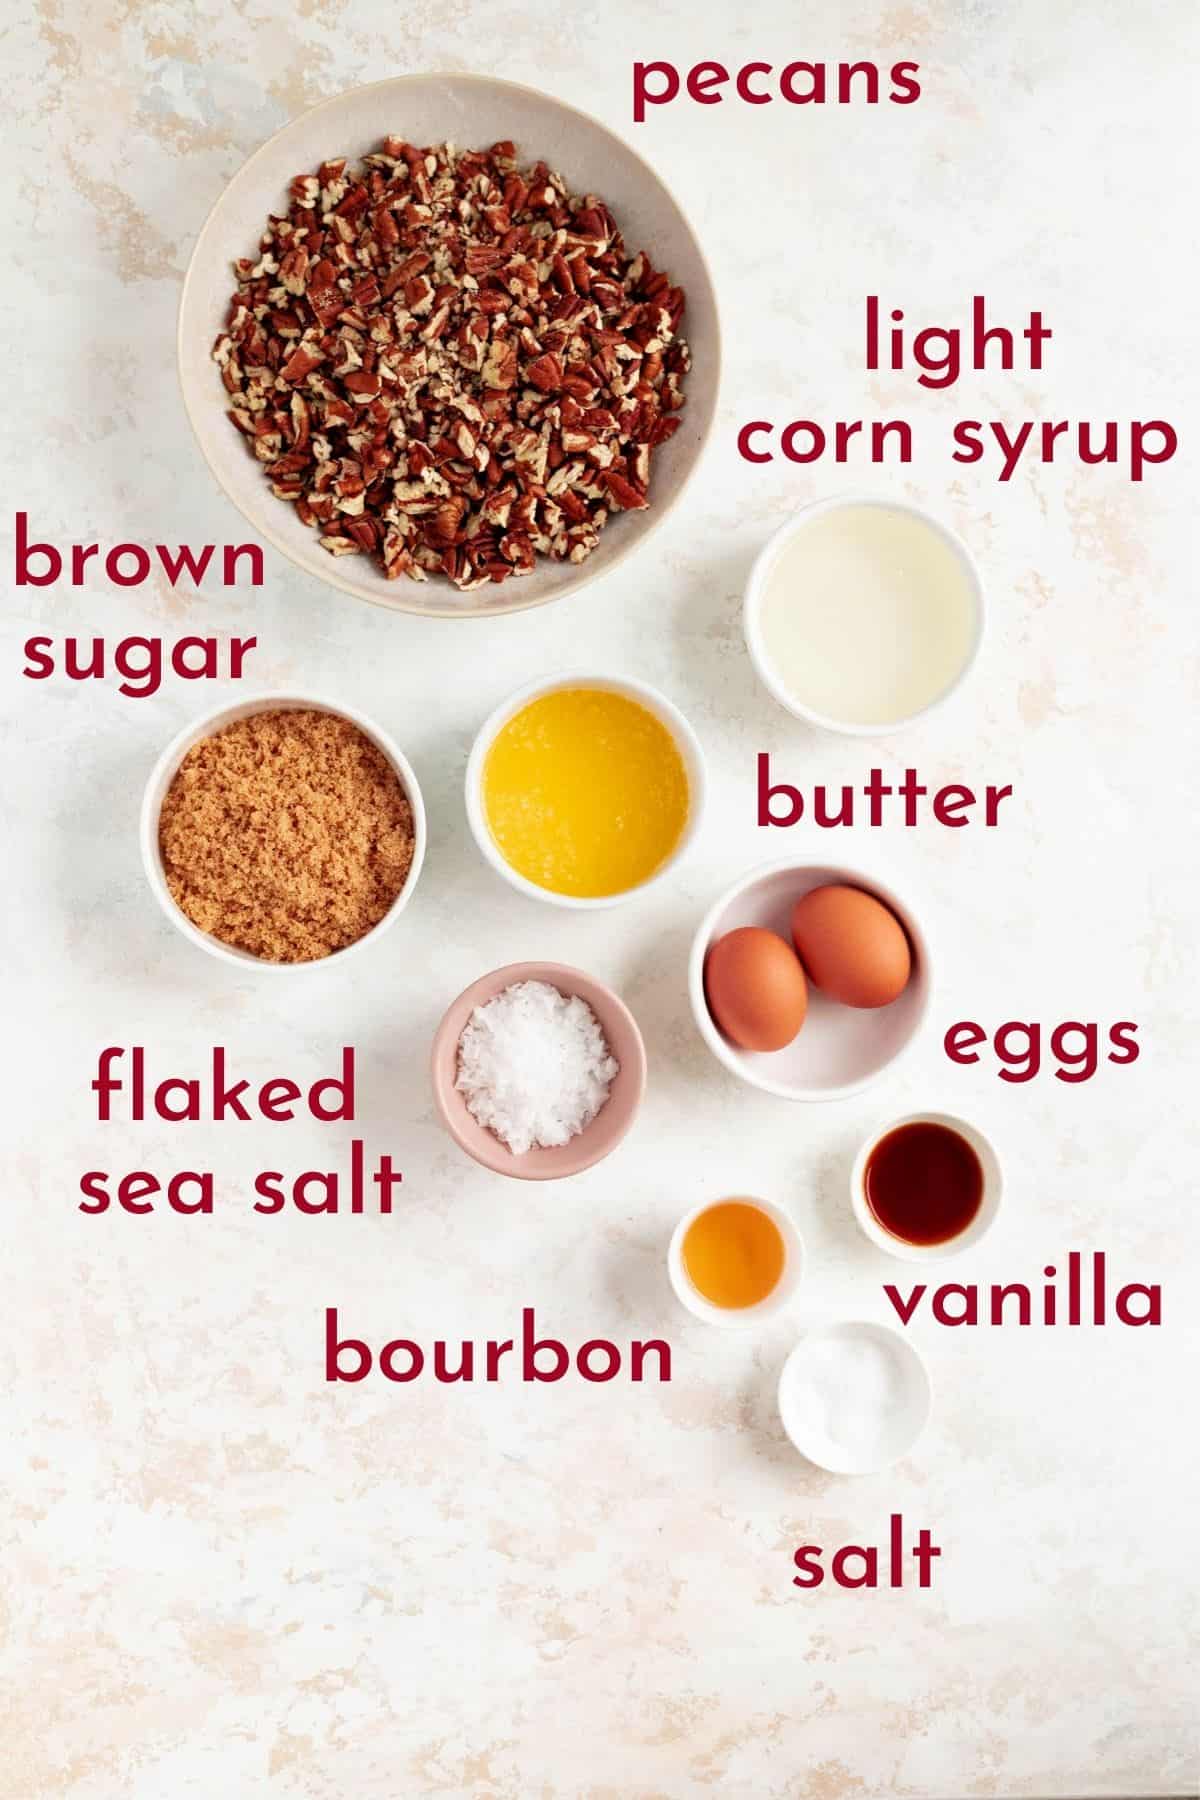 pecans, corn syrup, brown sugar, butter, sea salt, eggs, bourbon, vanilla, and salt in individual bowls.